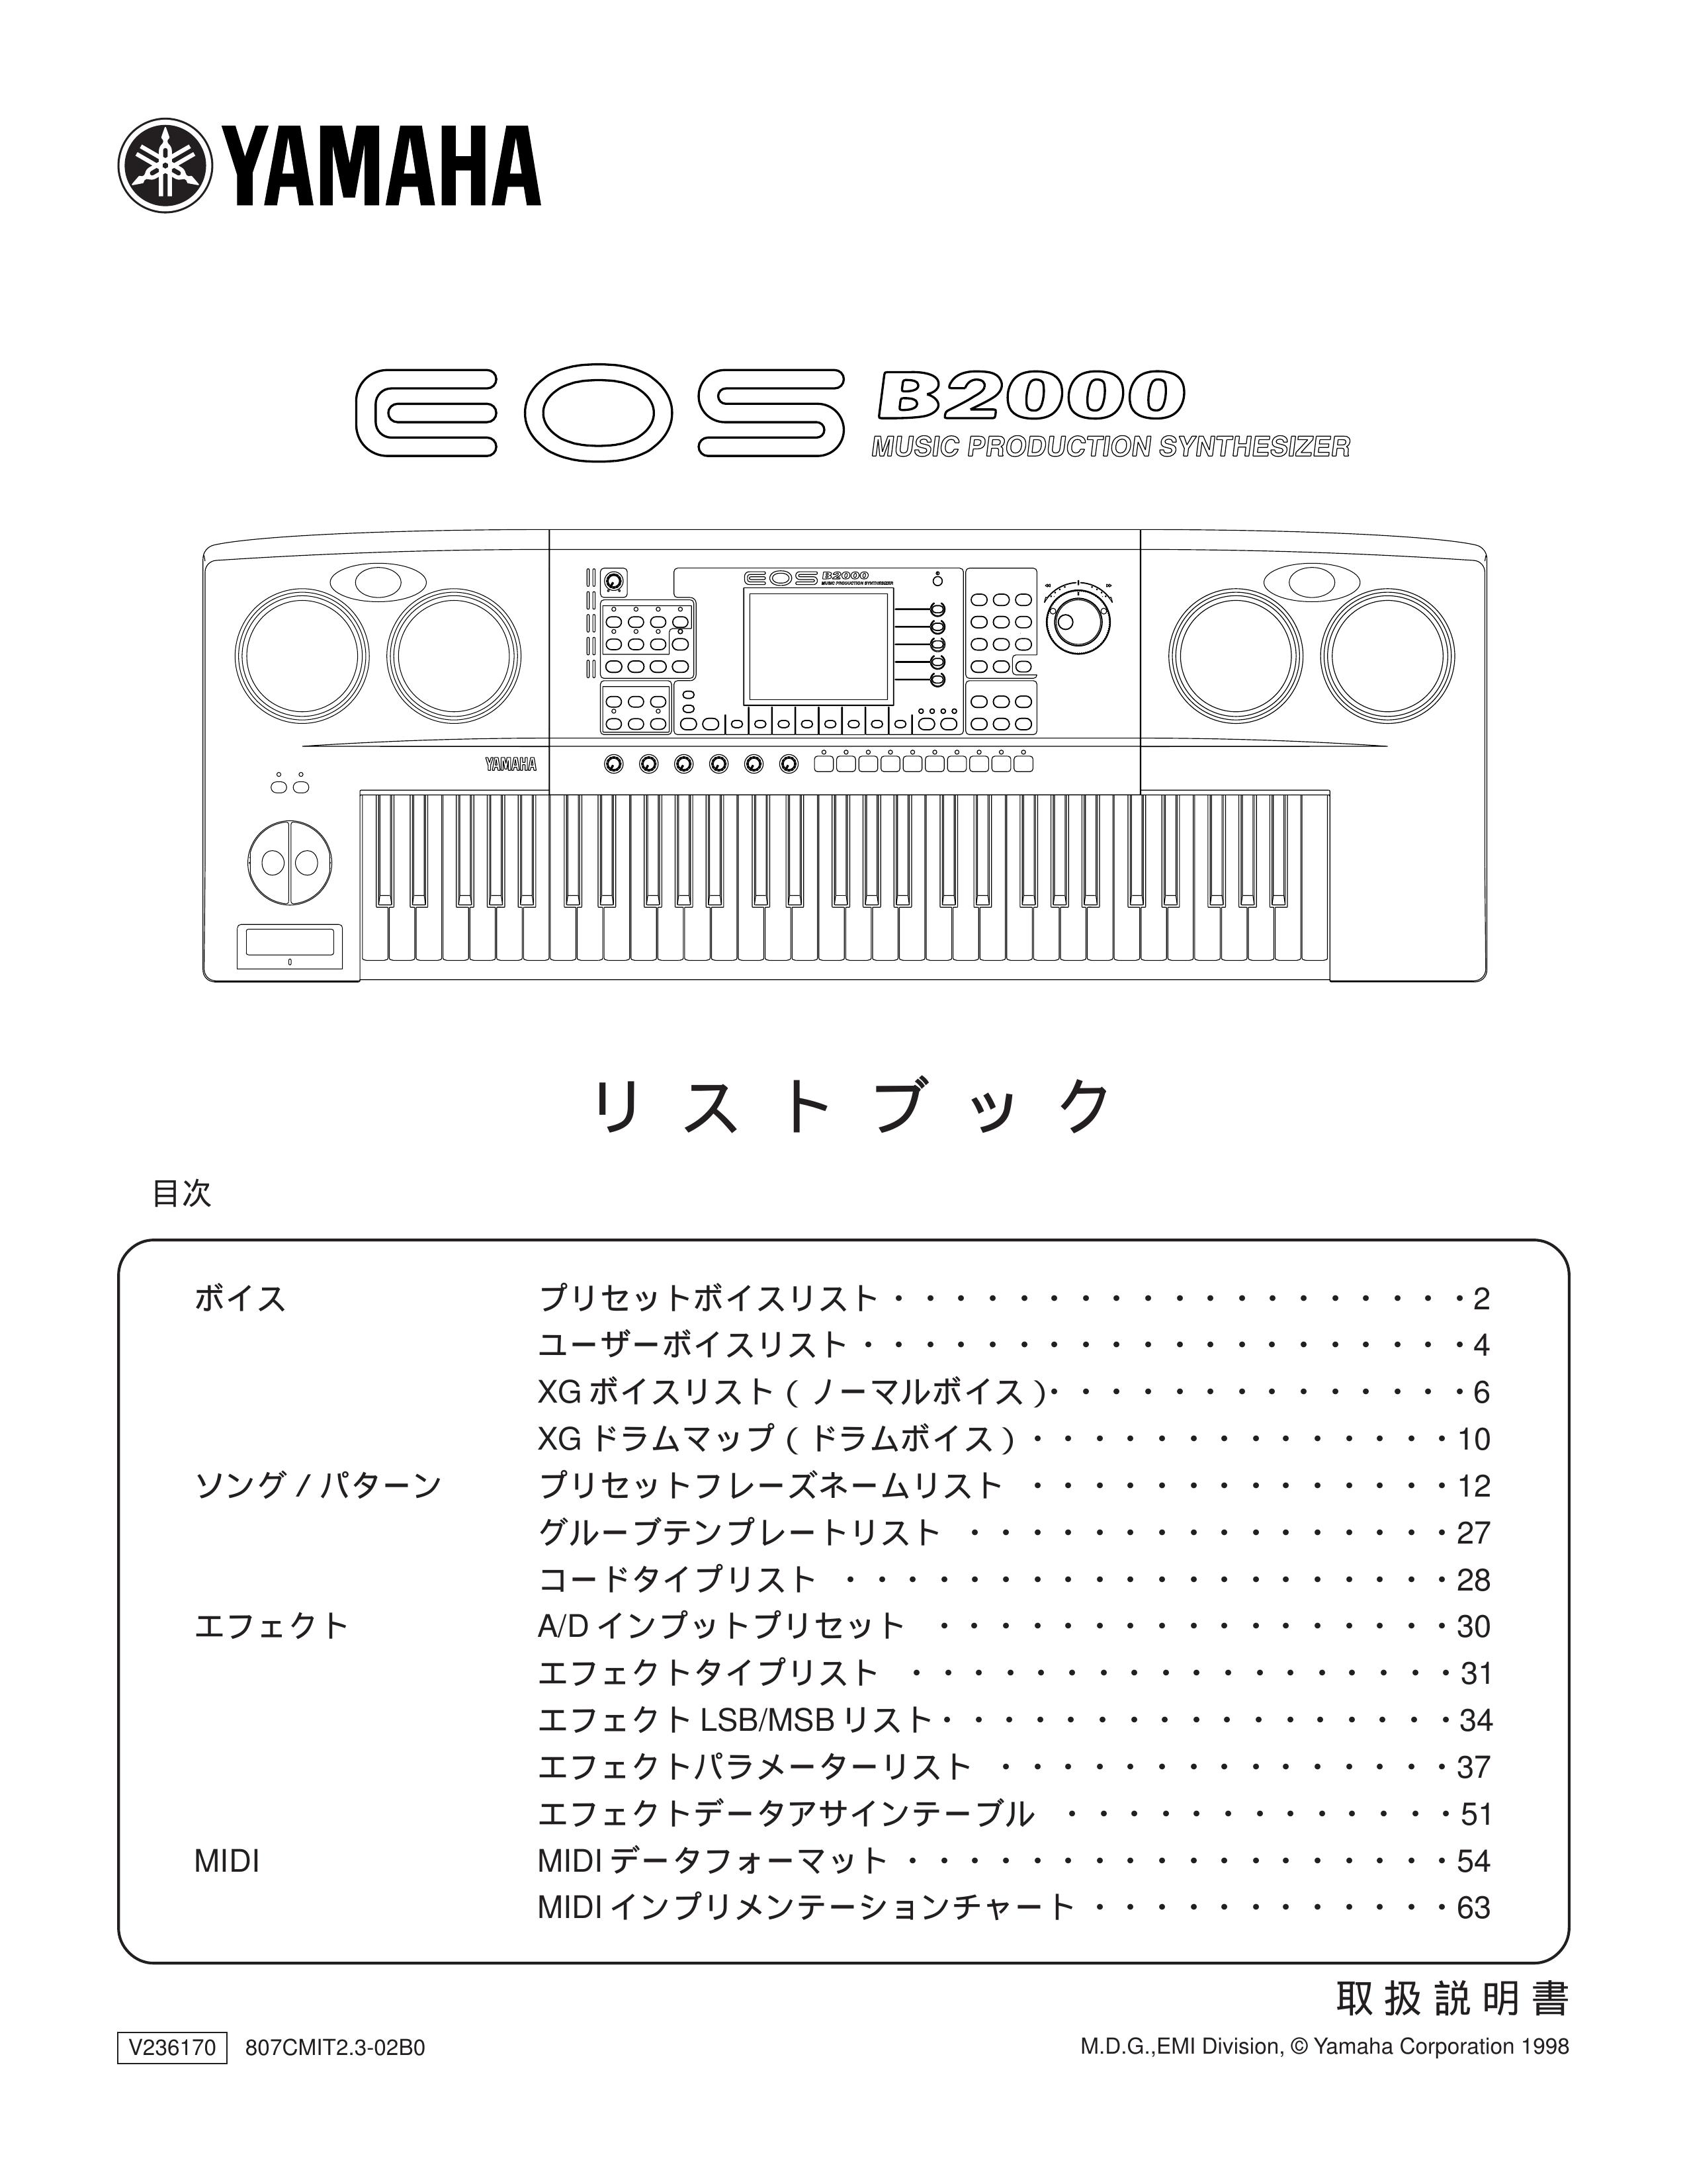 Yamaha B2000 Musical Instrument User Manual